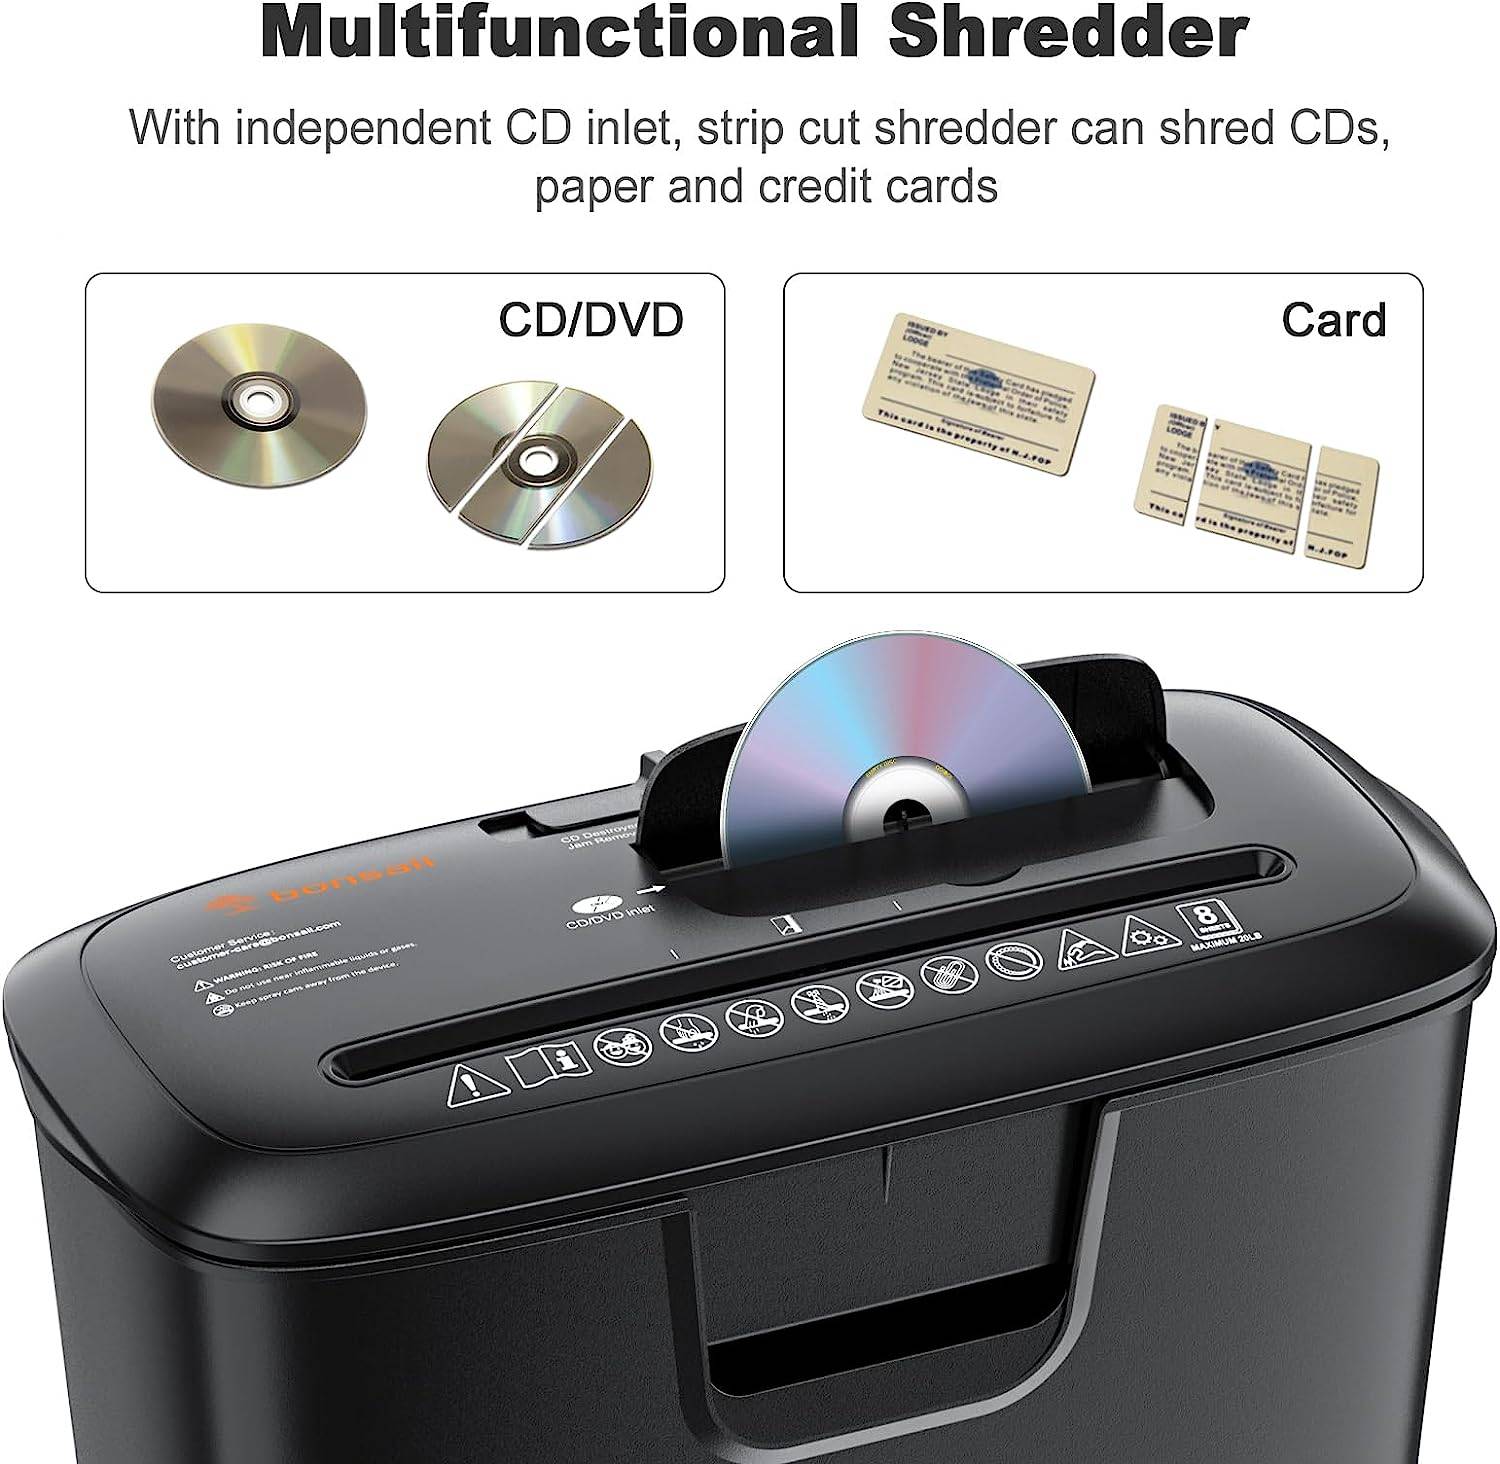   Basics 8-Sheet Strip Cut Paper, CD, and Credit Card  Shredder